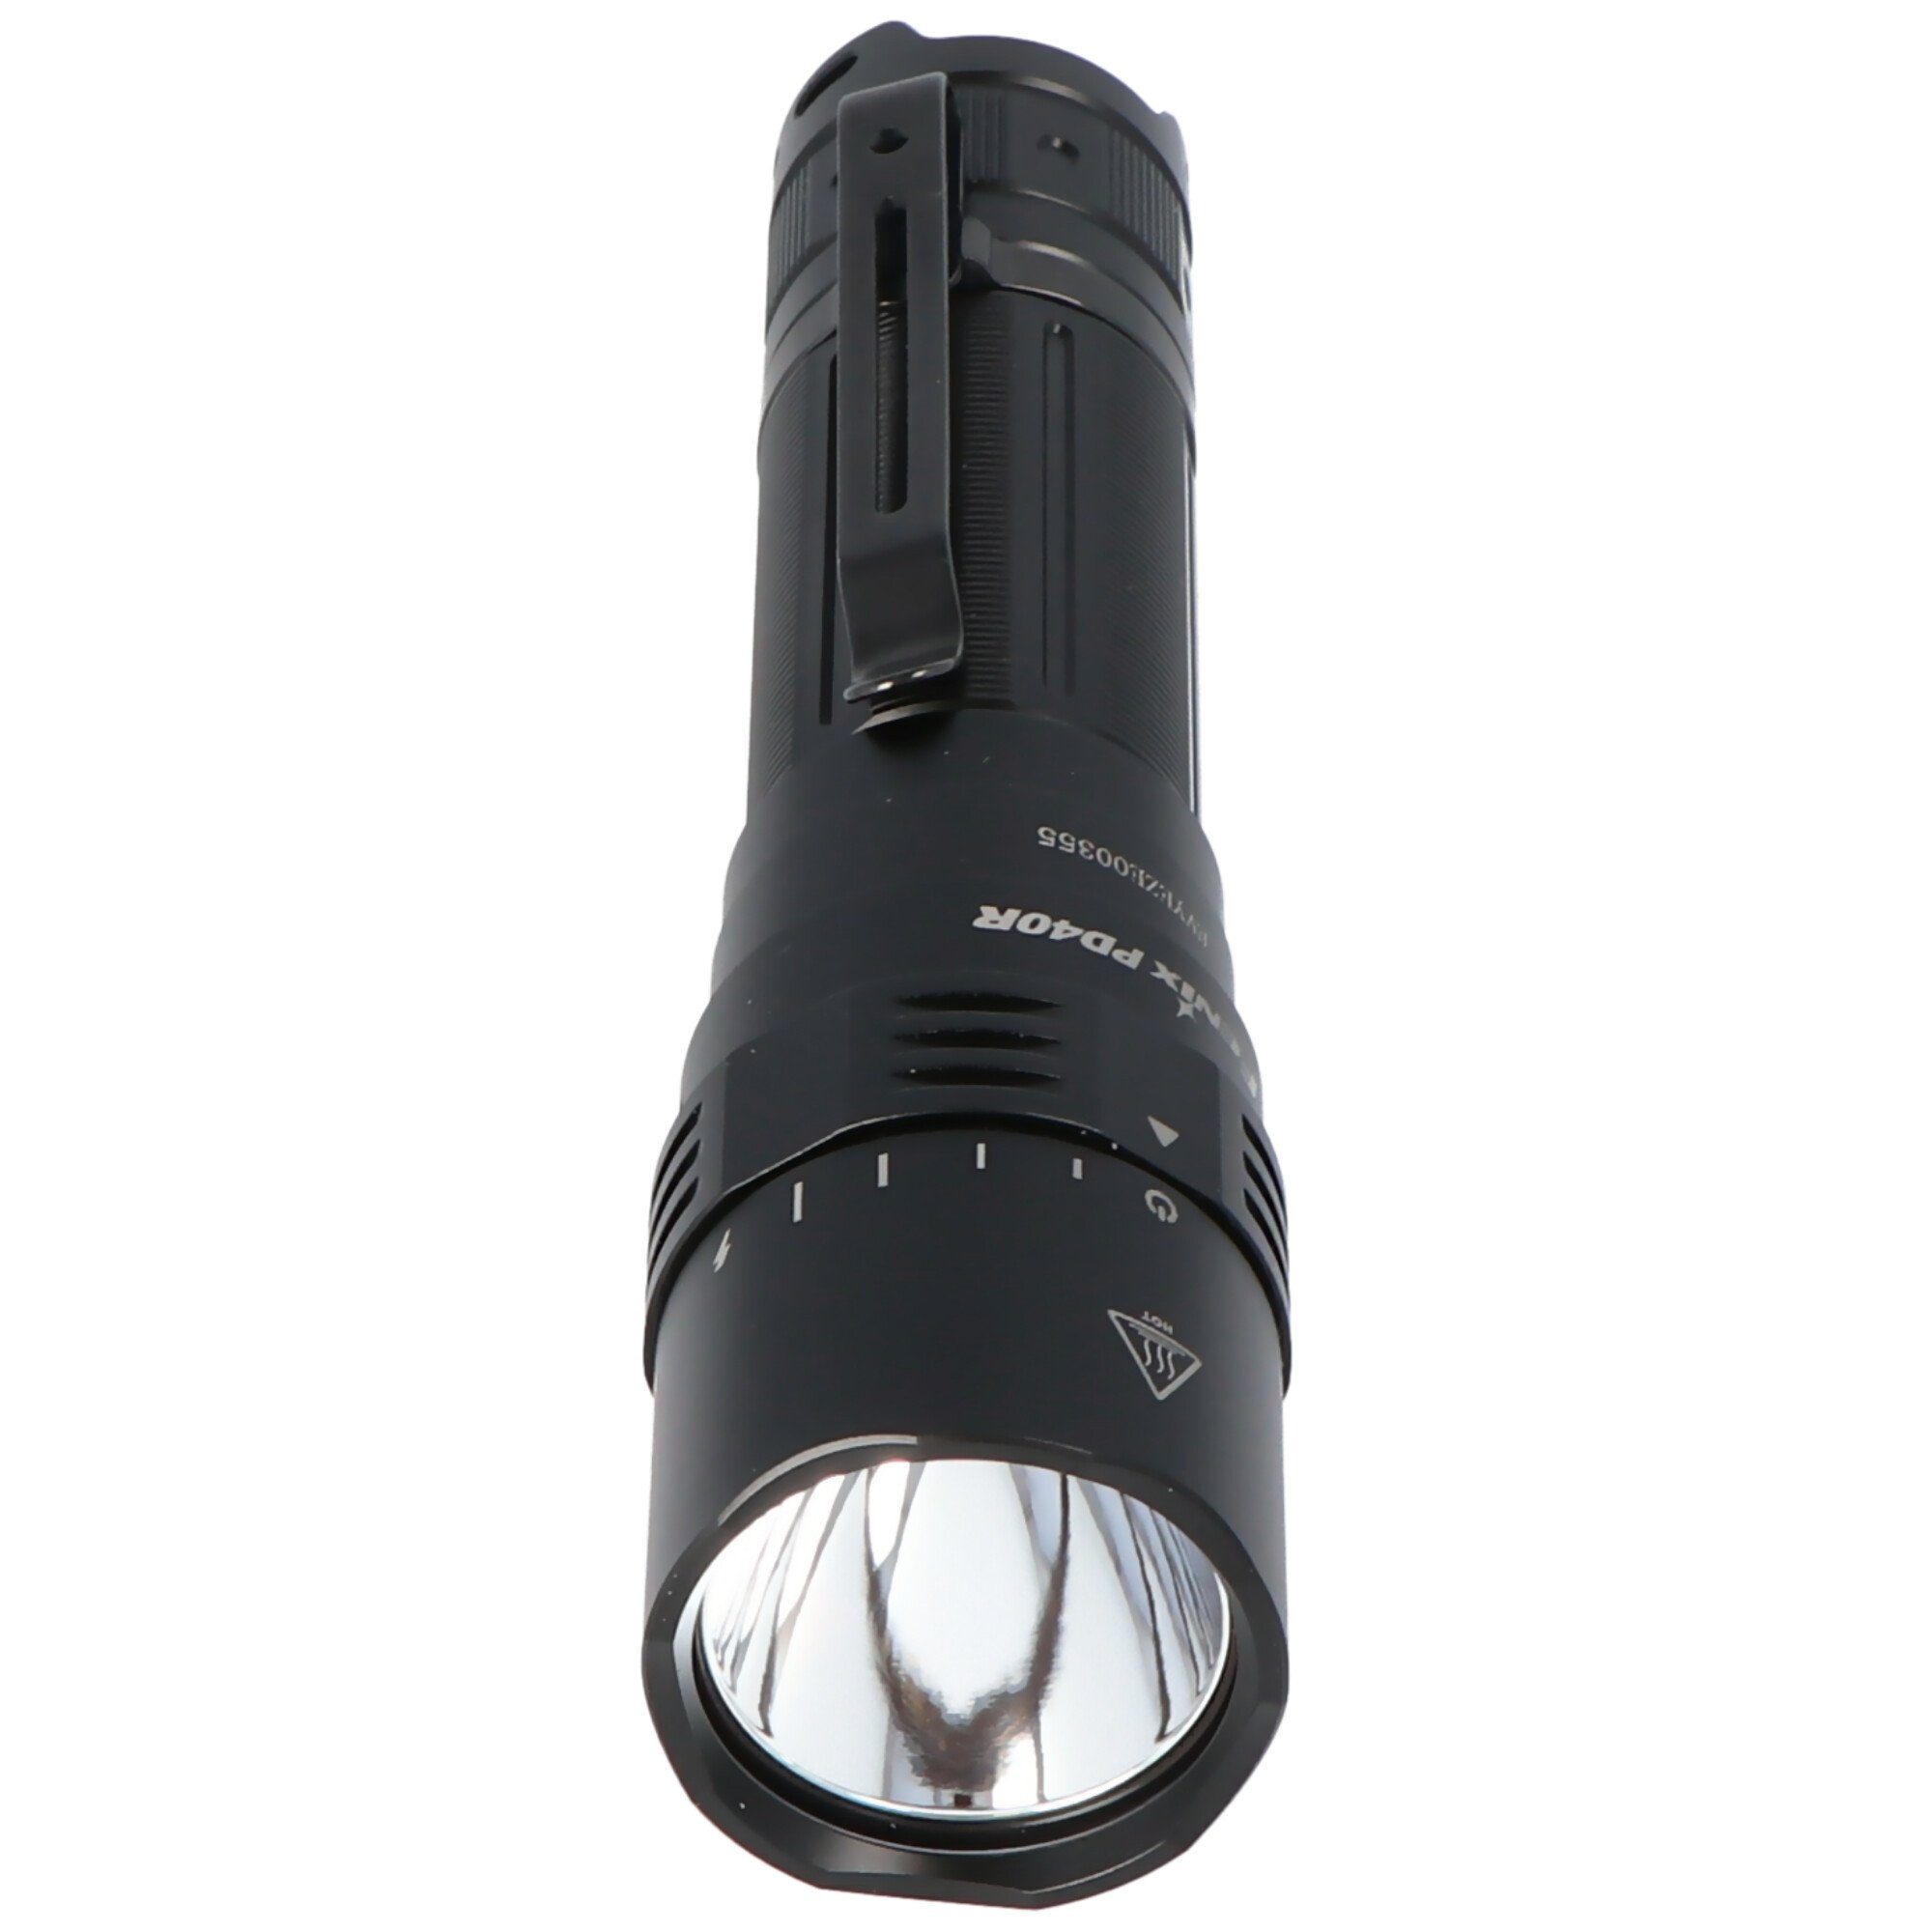 PD40R max. Fenix Taschenlampe V2.0 Akku LED-Taschenlampe LED und Fenix Lumen inklusive 3000